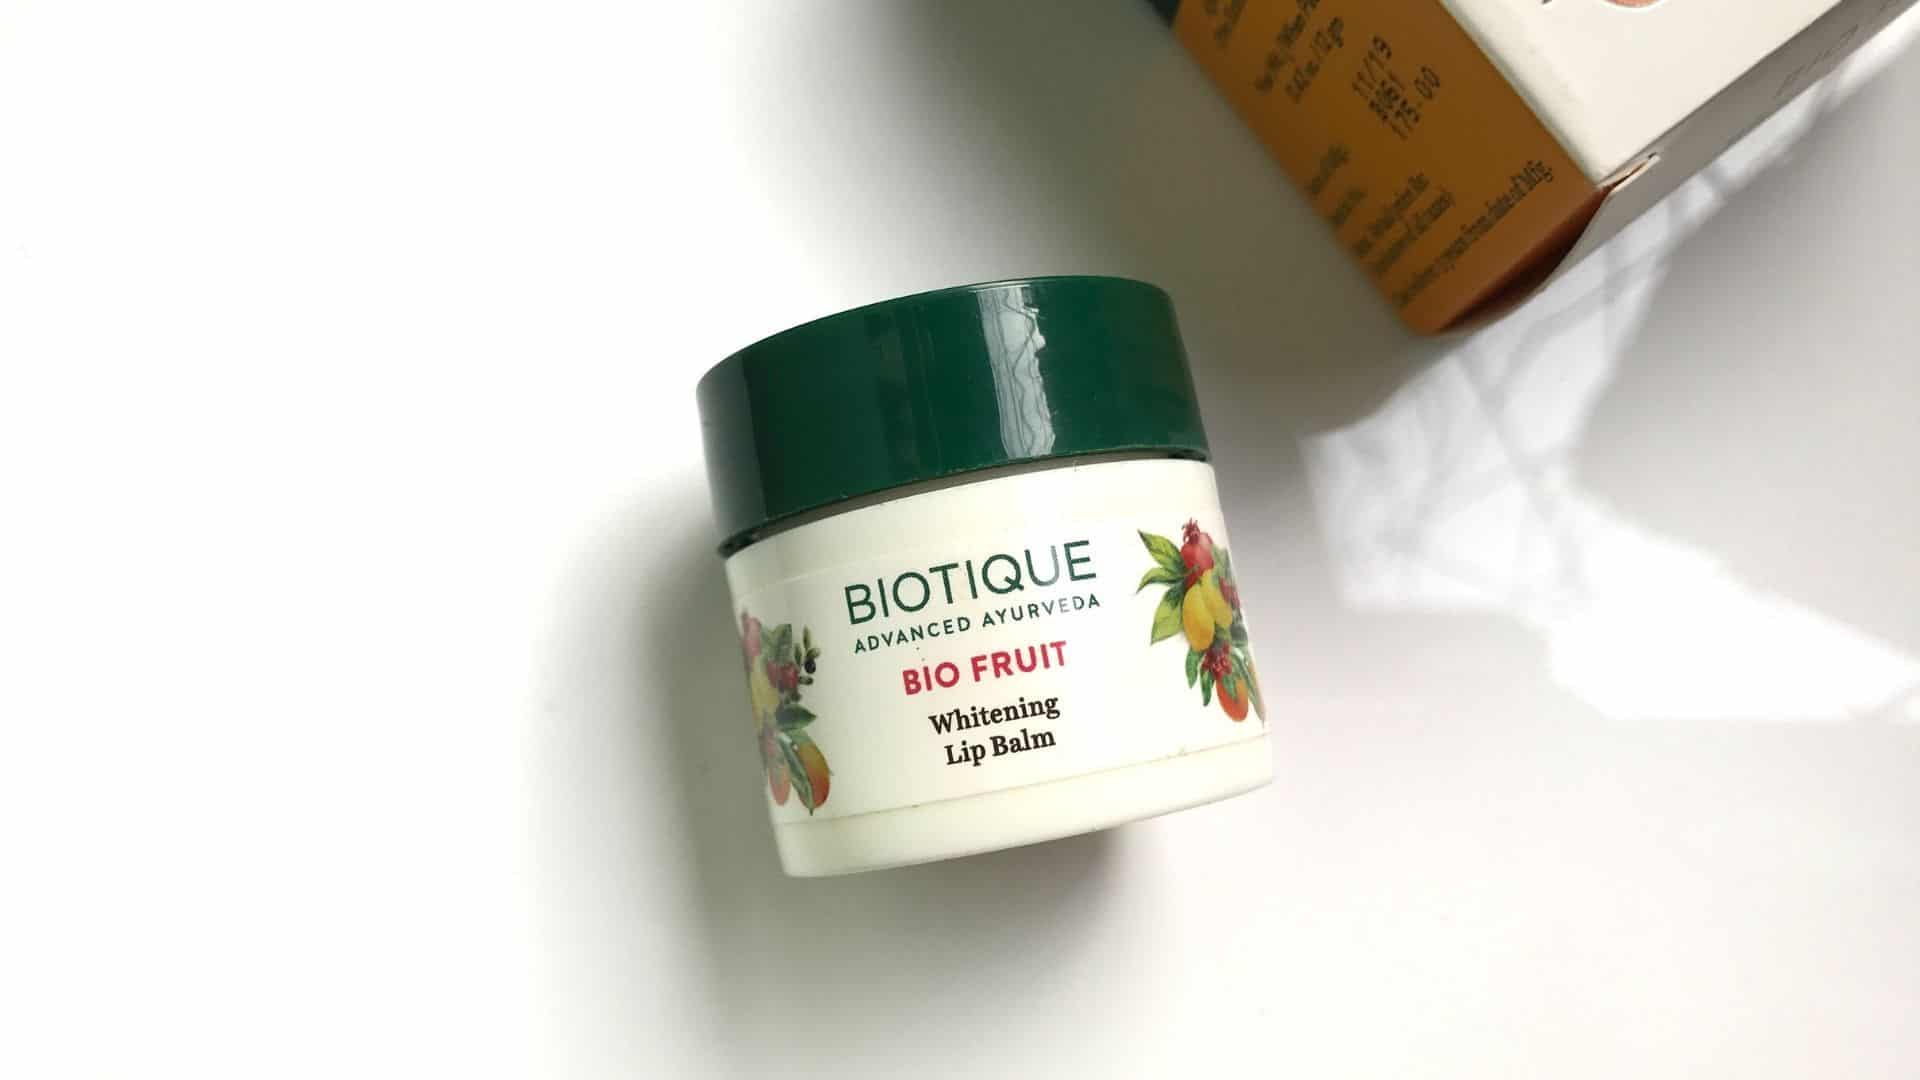 Biotique Bio Fruit Whitening Lip Balm is the Popular Lip Balm in India